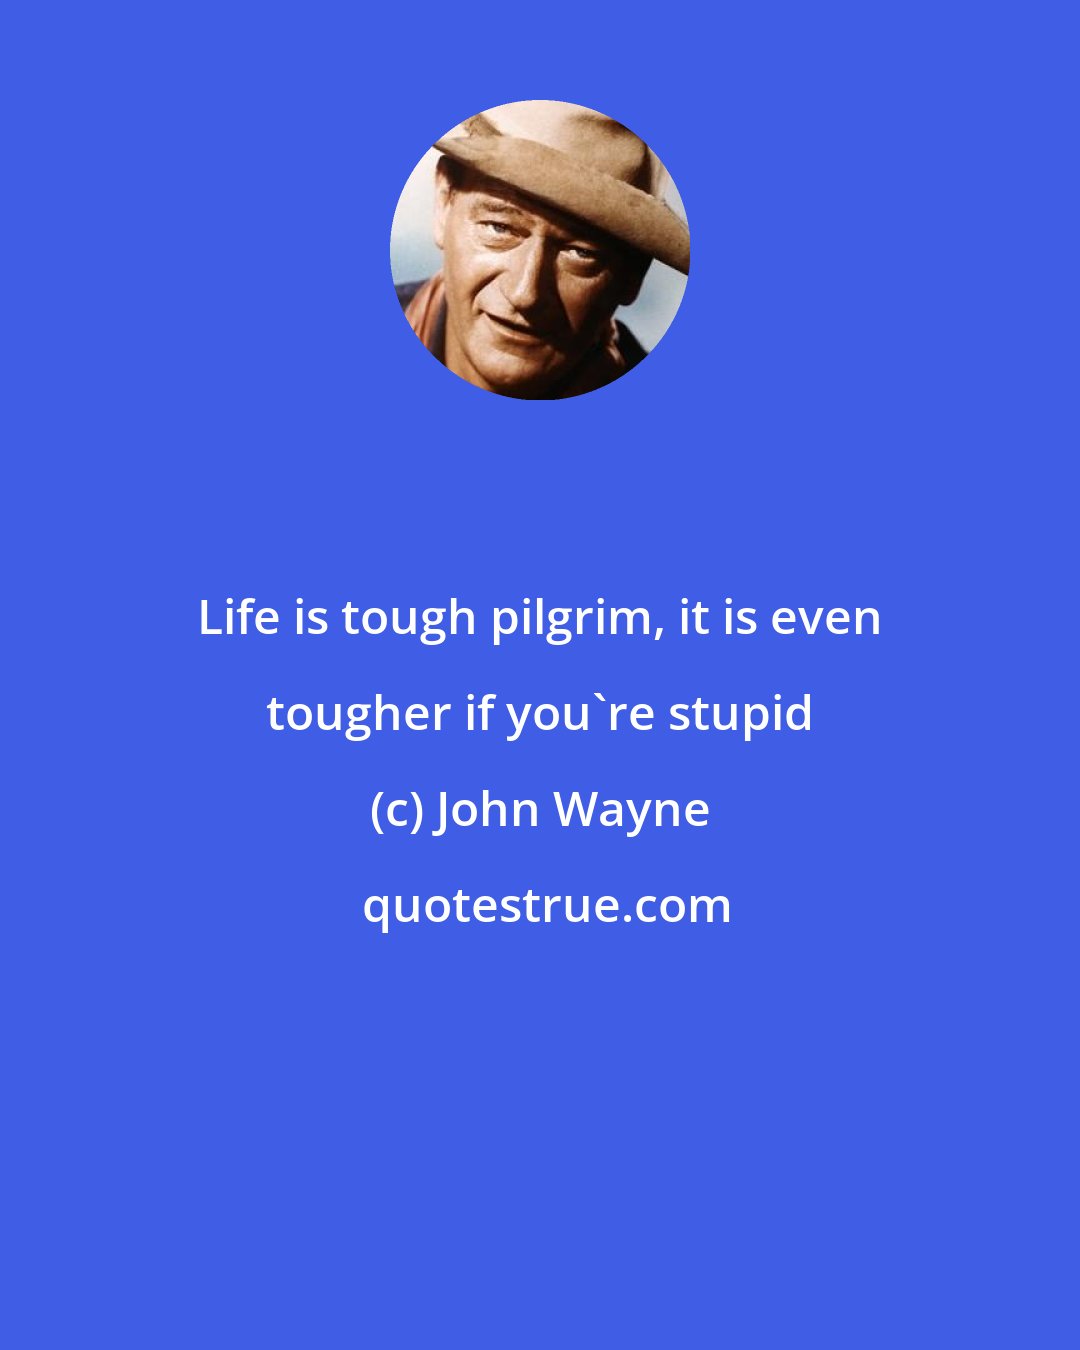 John Wayne: Life is tough pilgrim, it is even tougher if you're stupid